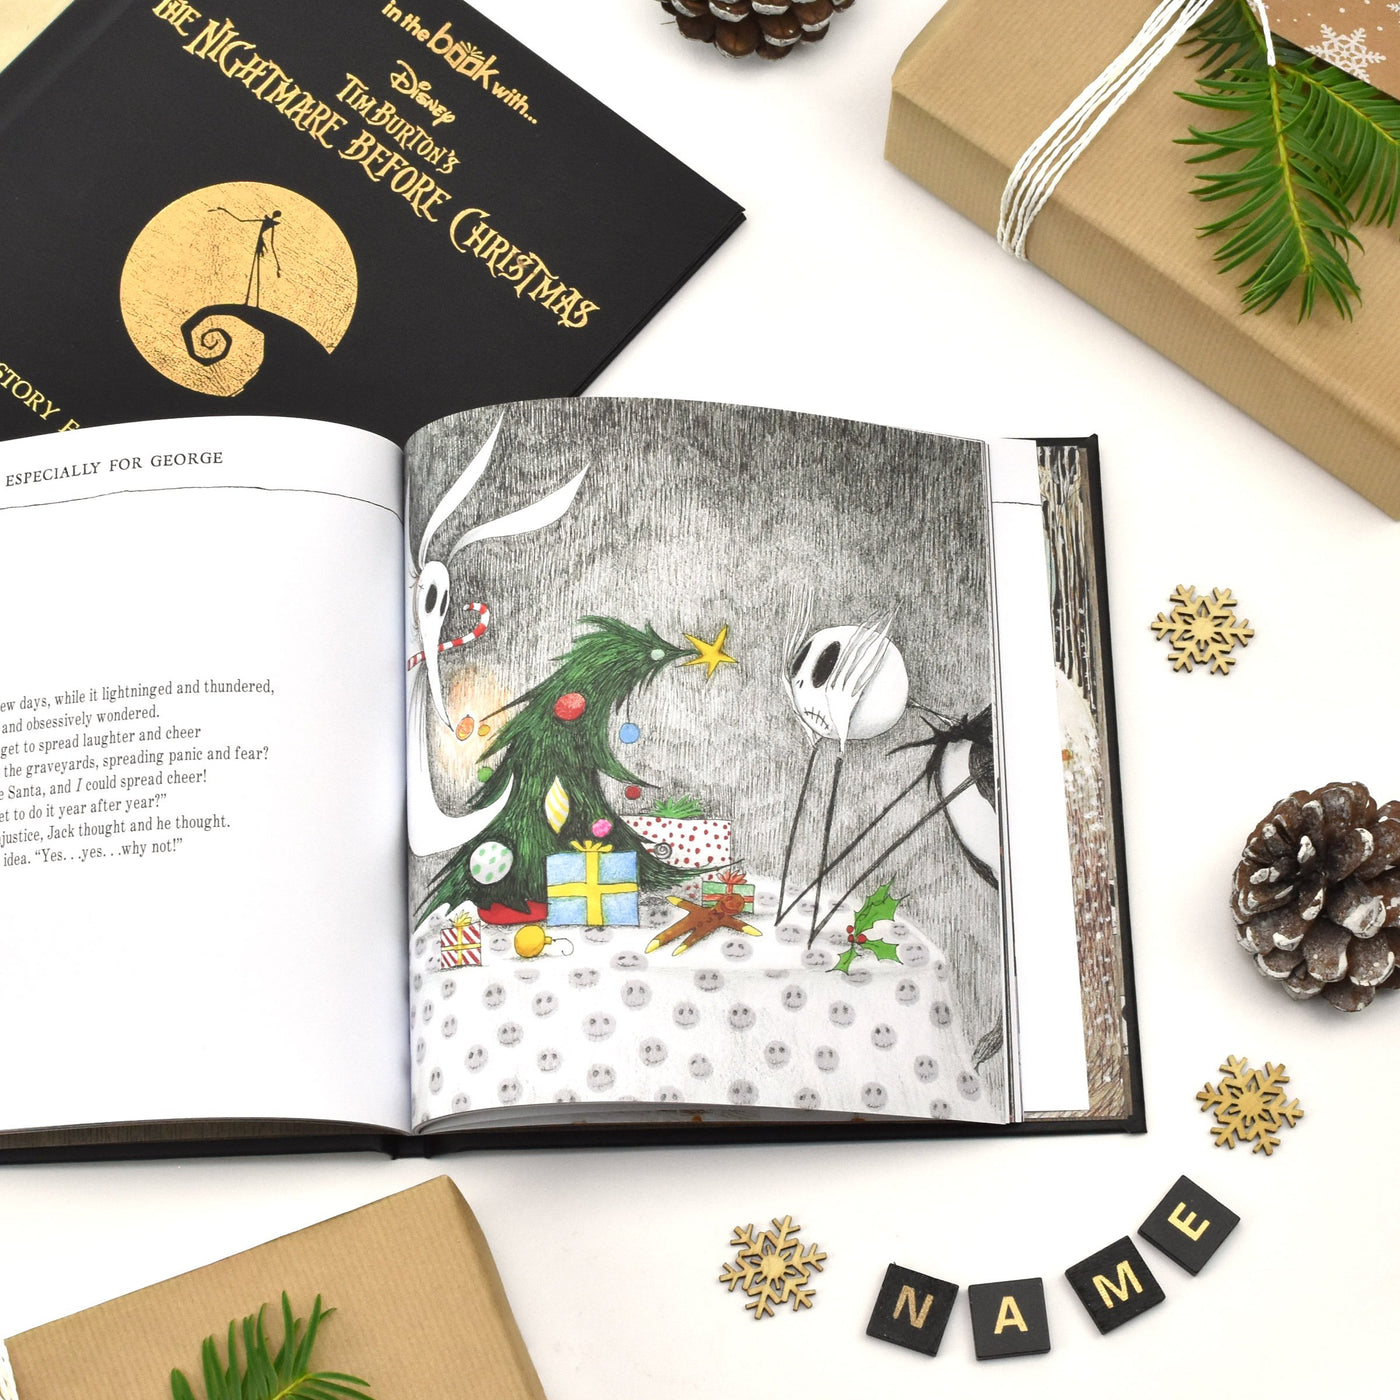 Personalised Disney Nightmare before Christmas Story Book - Shop Personalised Gifts